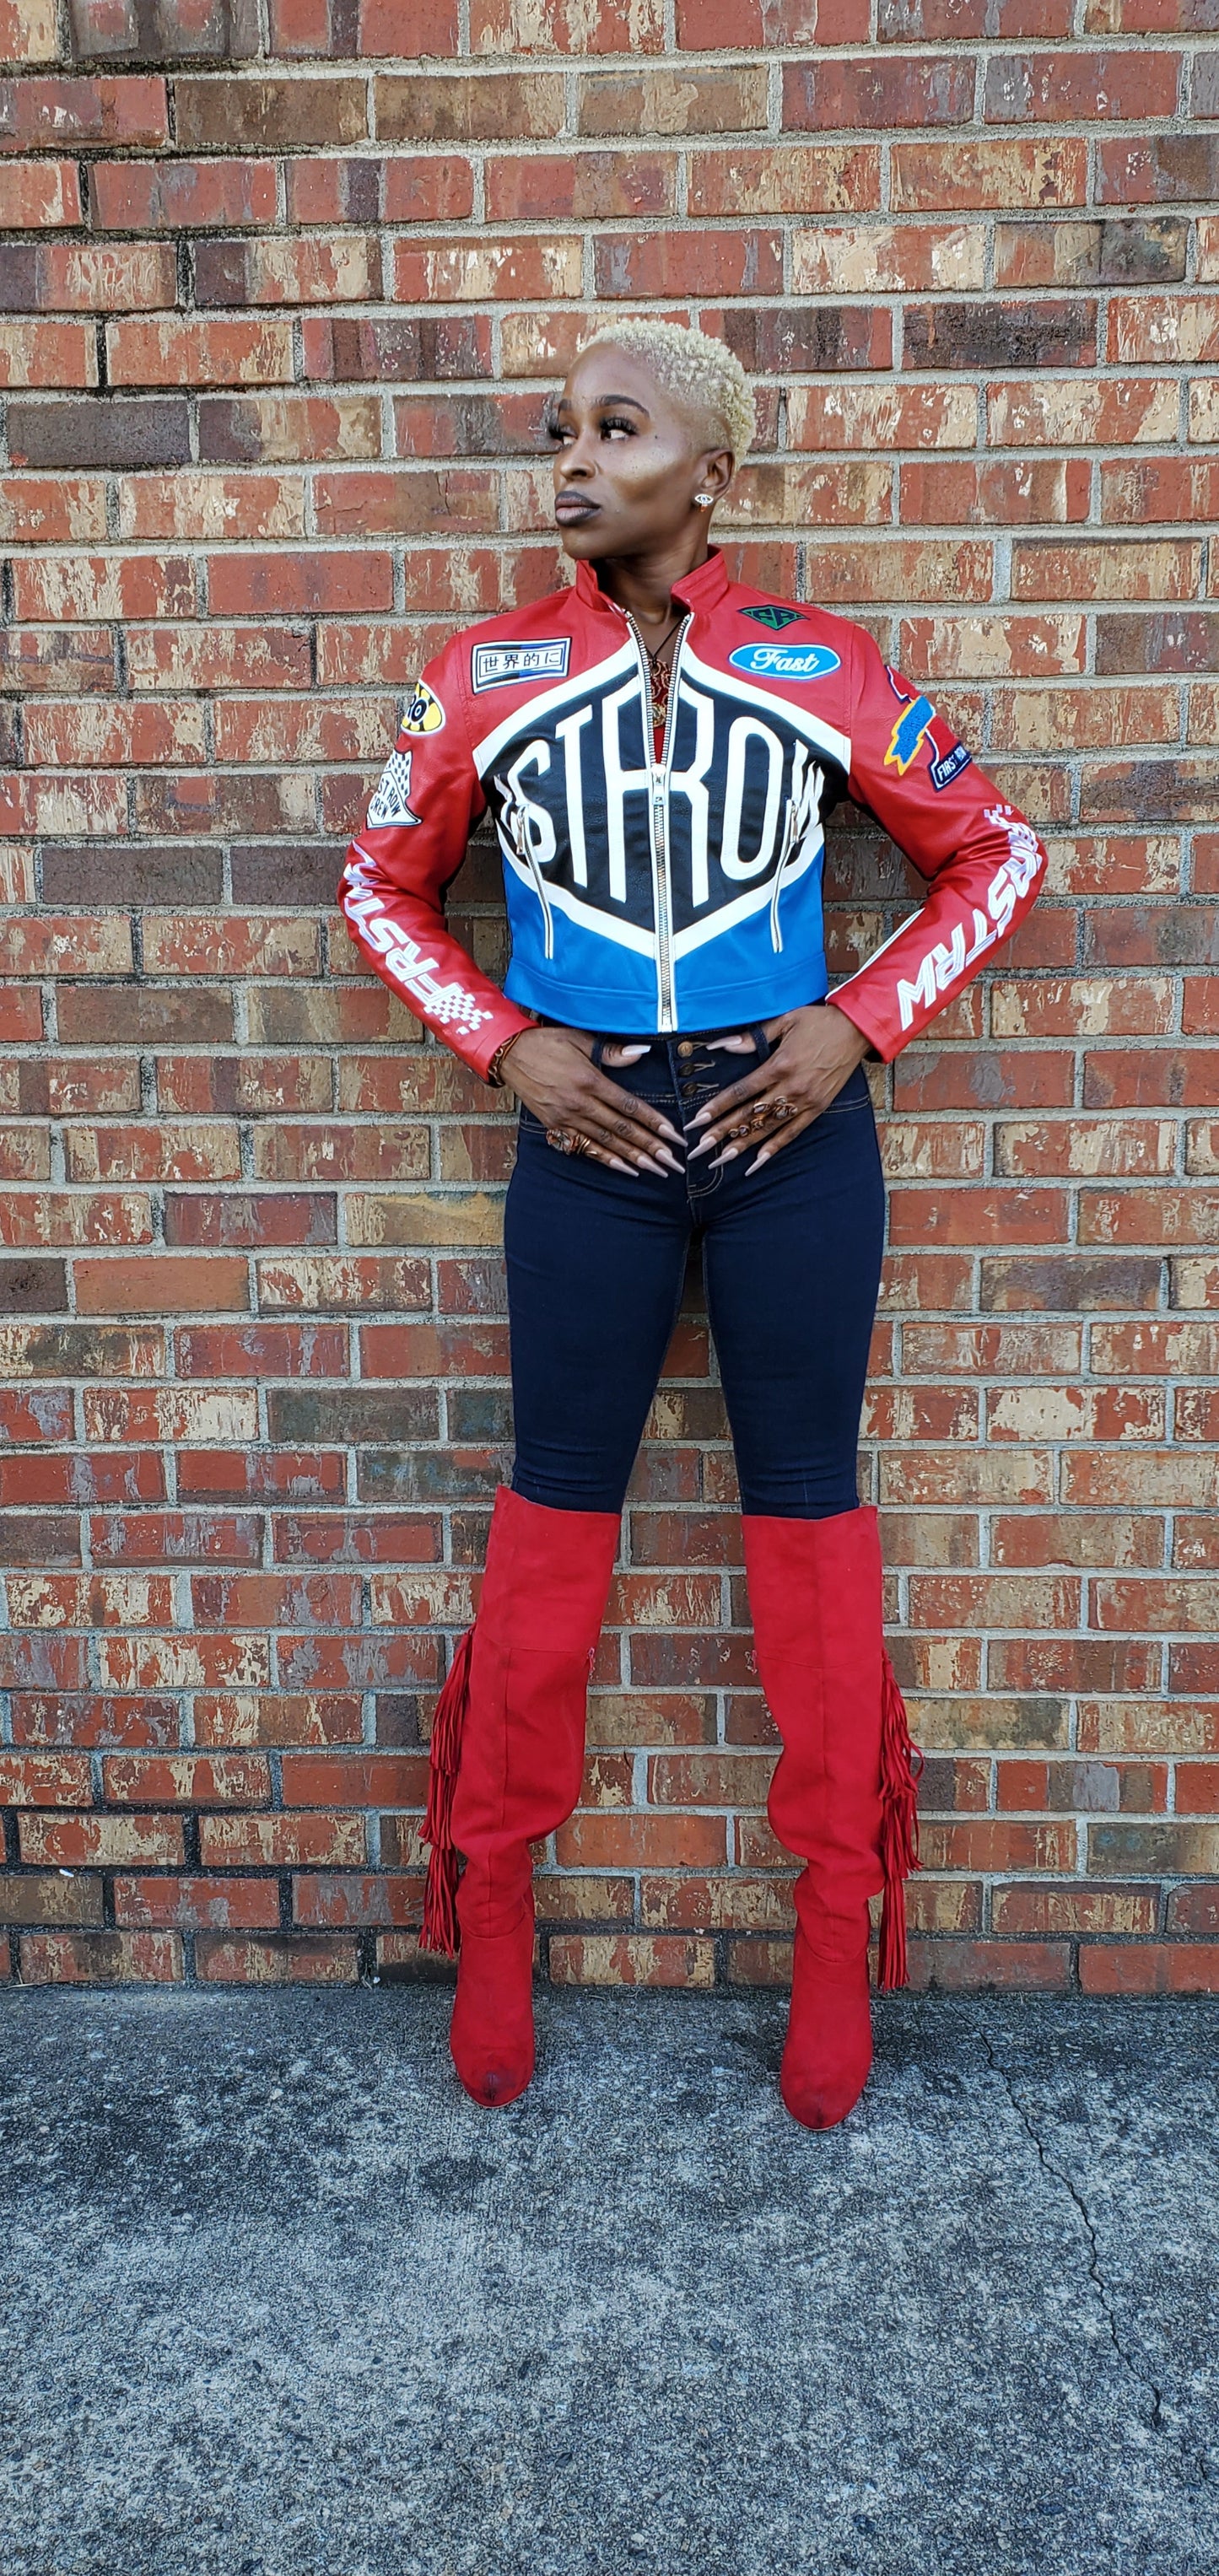 Jacket: Womens First Row Motor Bike